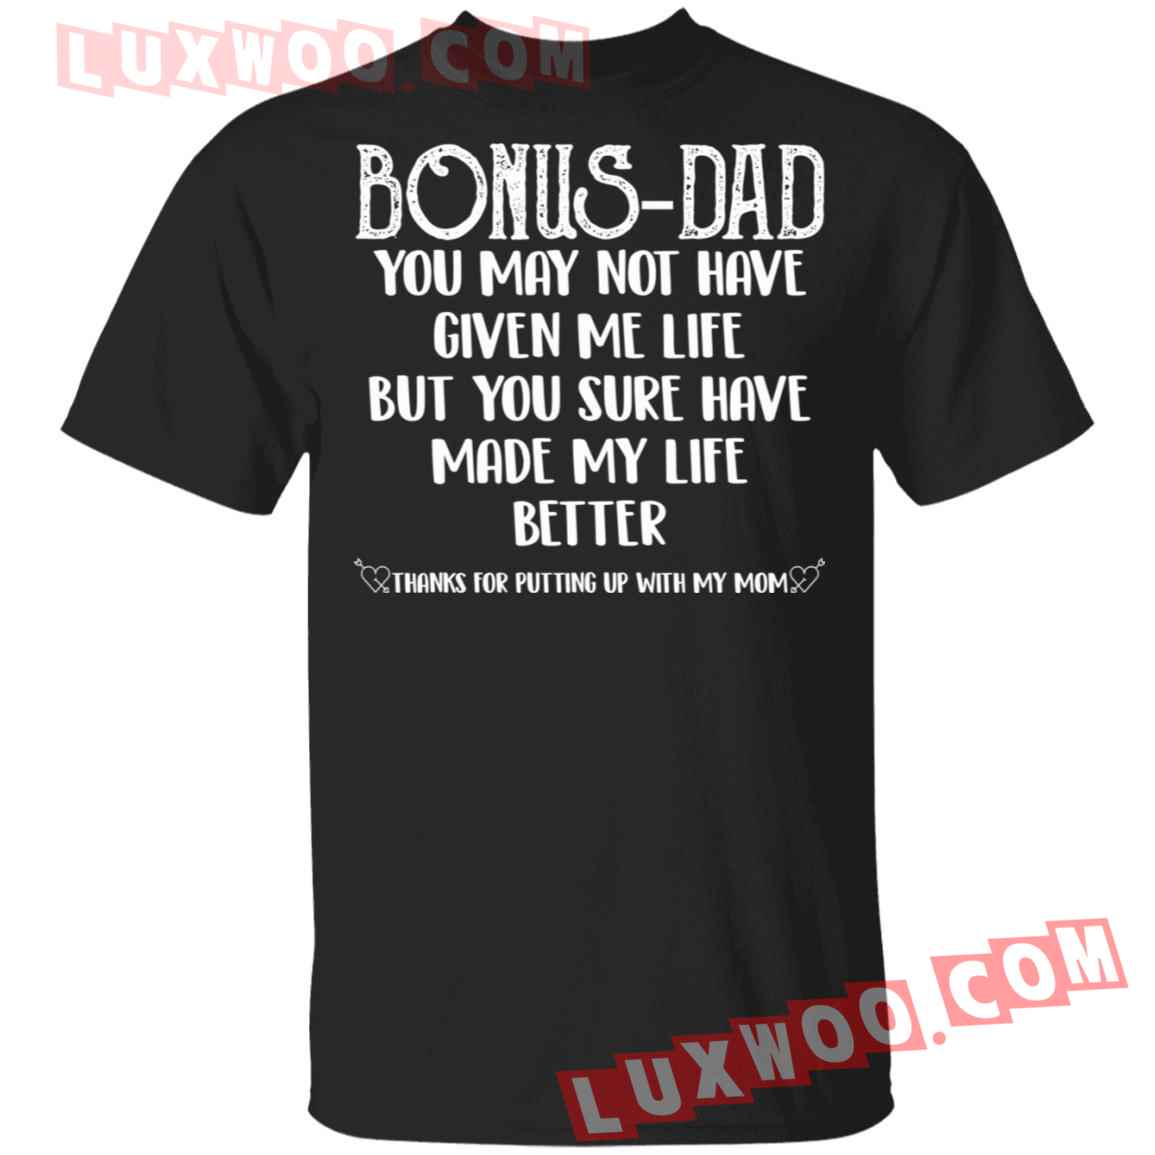 Bonus Dad You Sure Have Made My Life Better Shirt